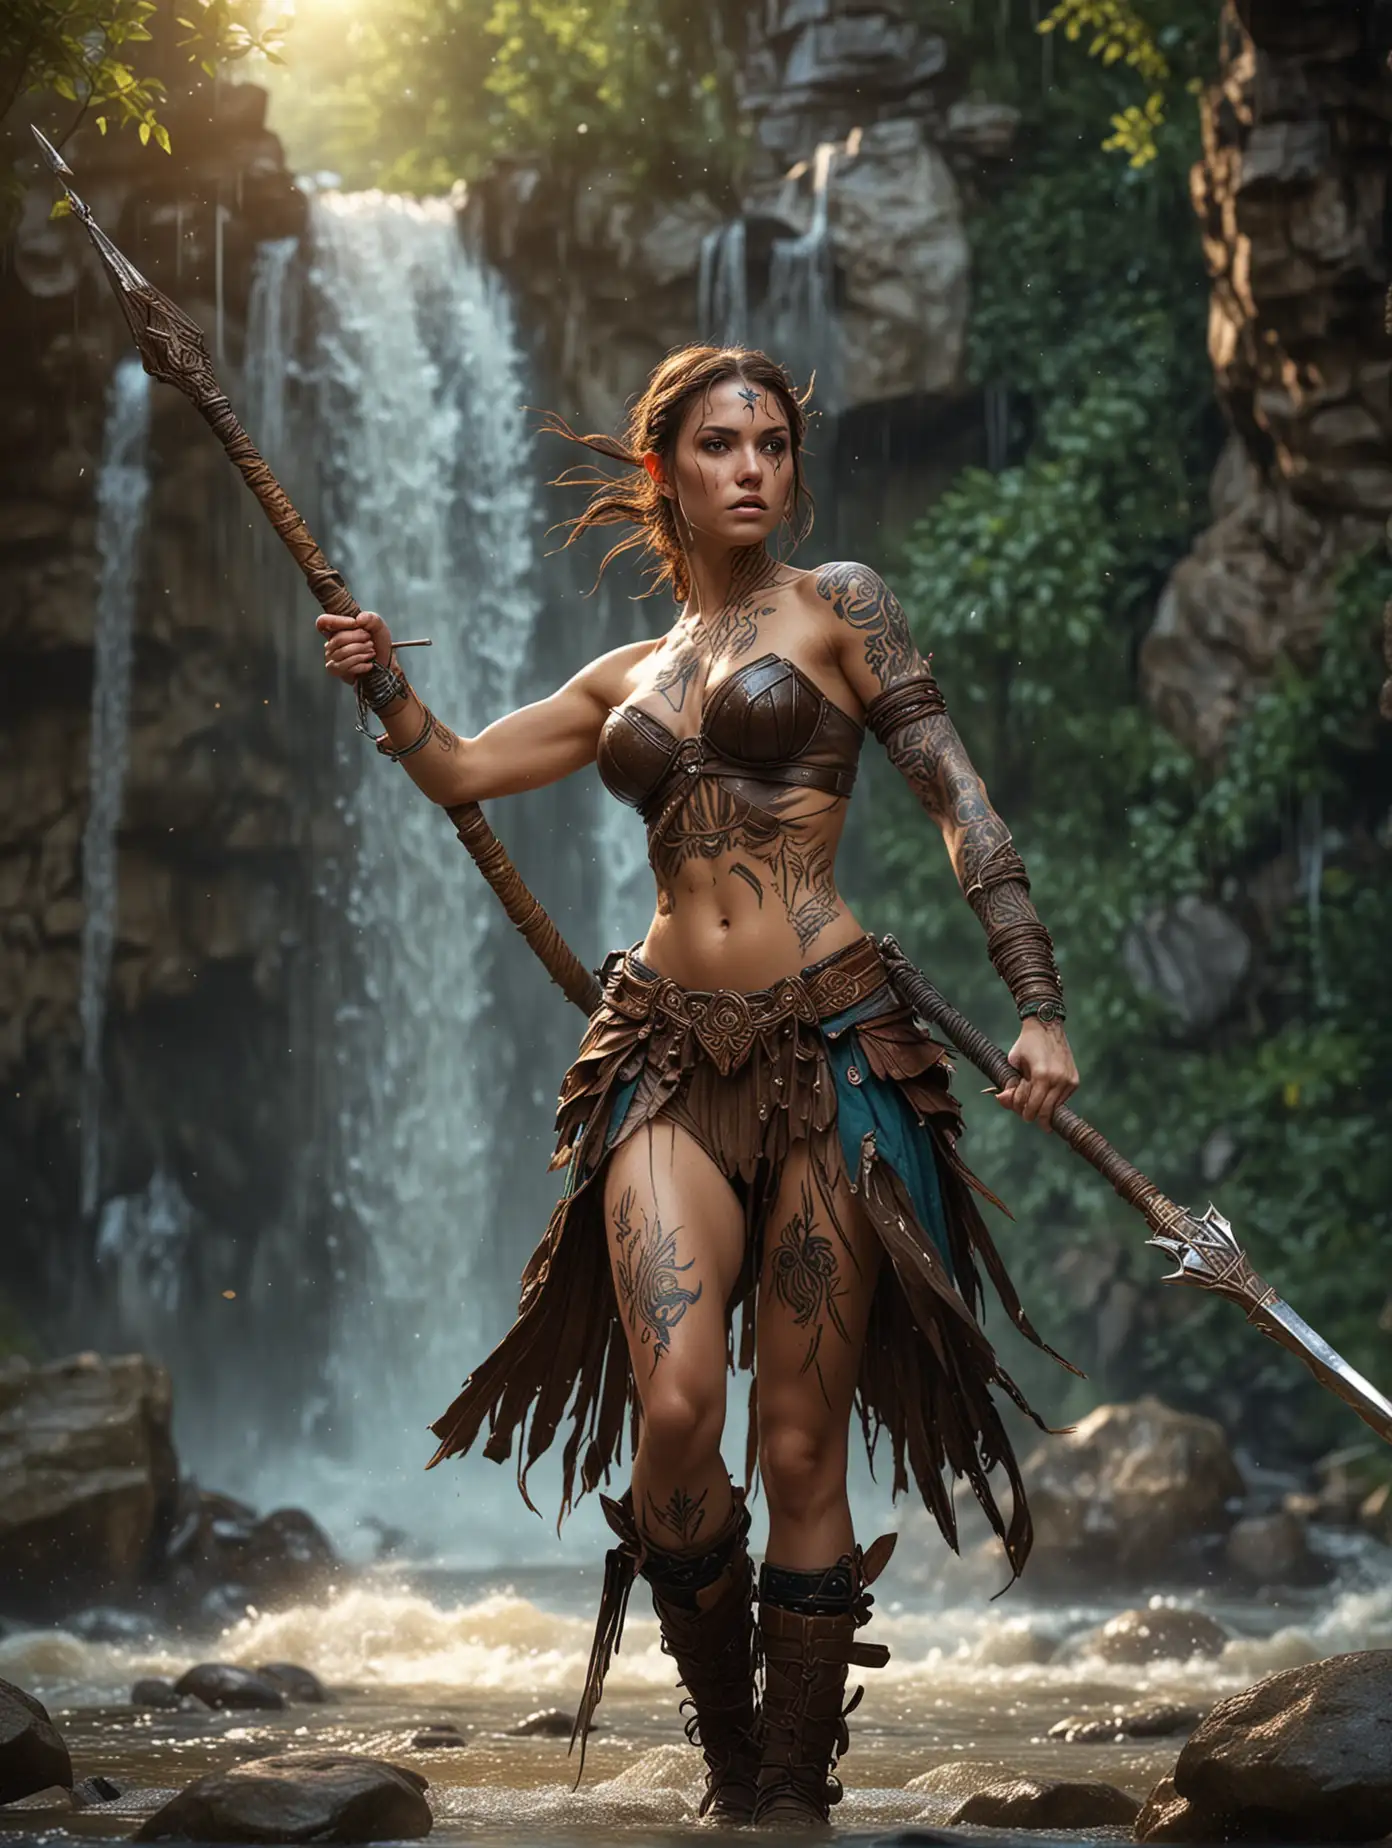 Dynamic-Amazon-Warrior-Cosplay-Brunette-Girl-with-Spear-in-Fantasy-Riverside-Scene